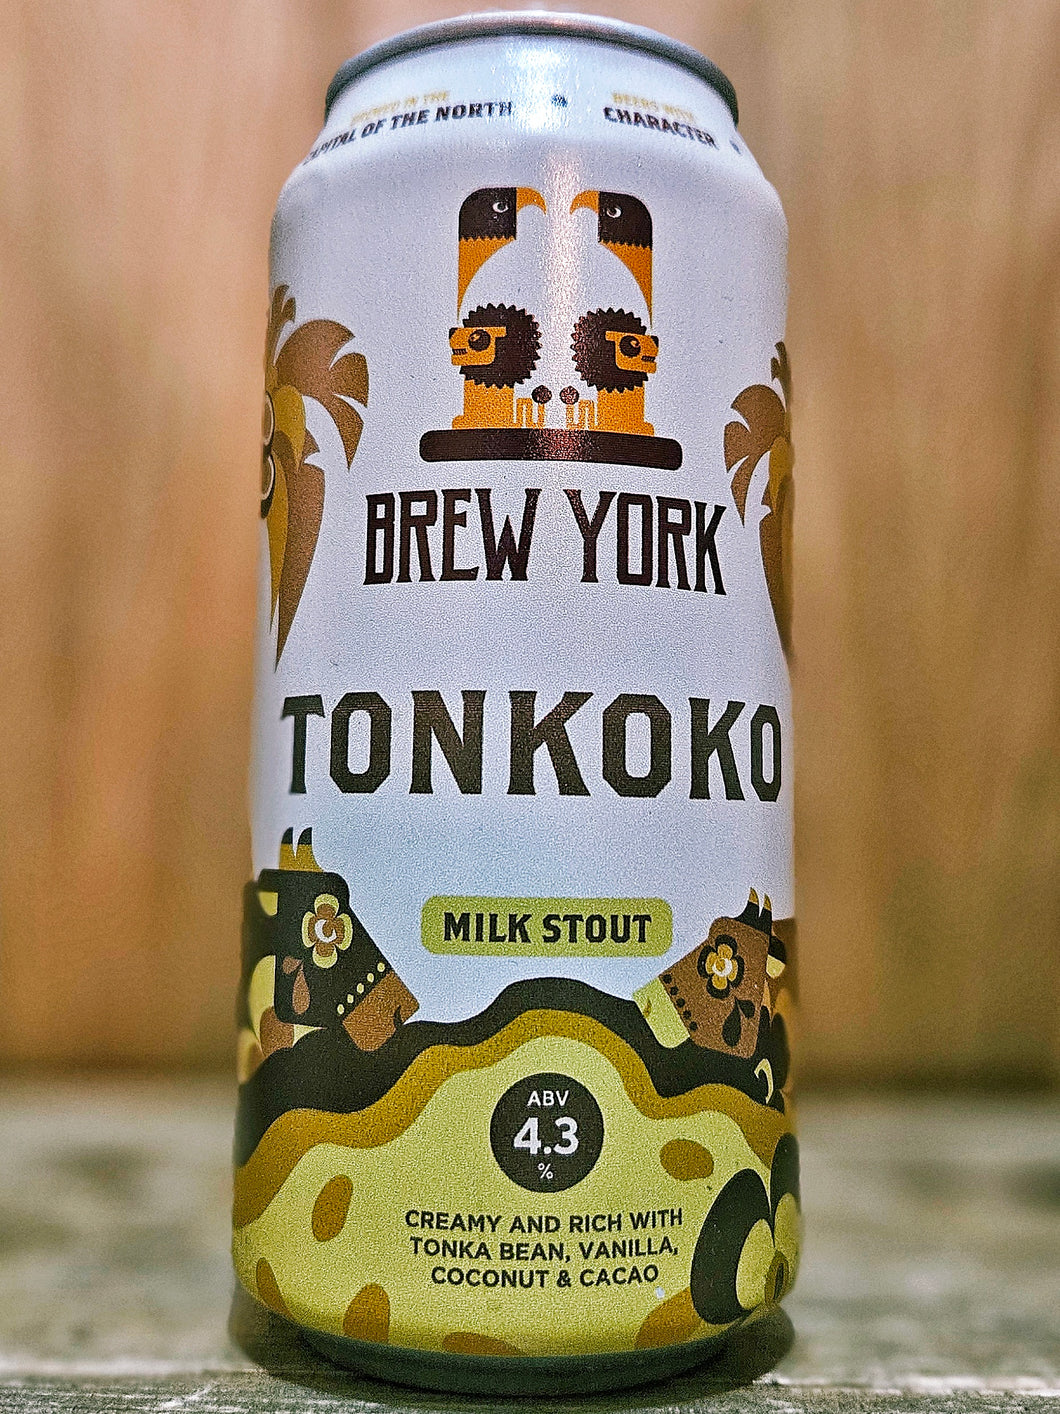 Brew York - Tonkoko